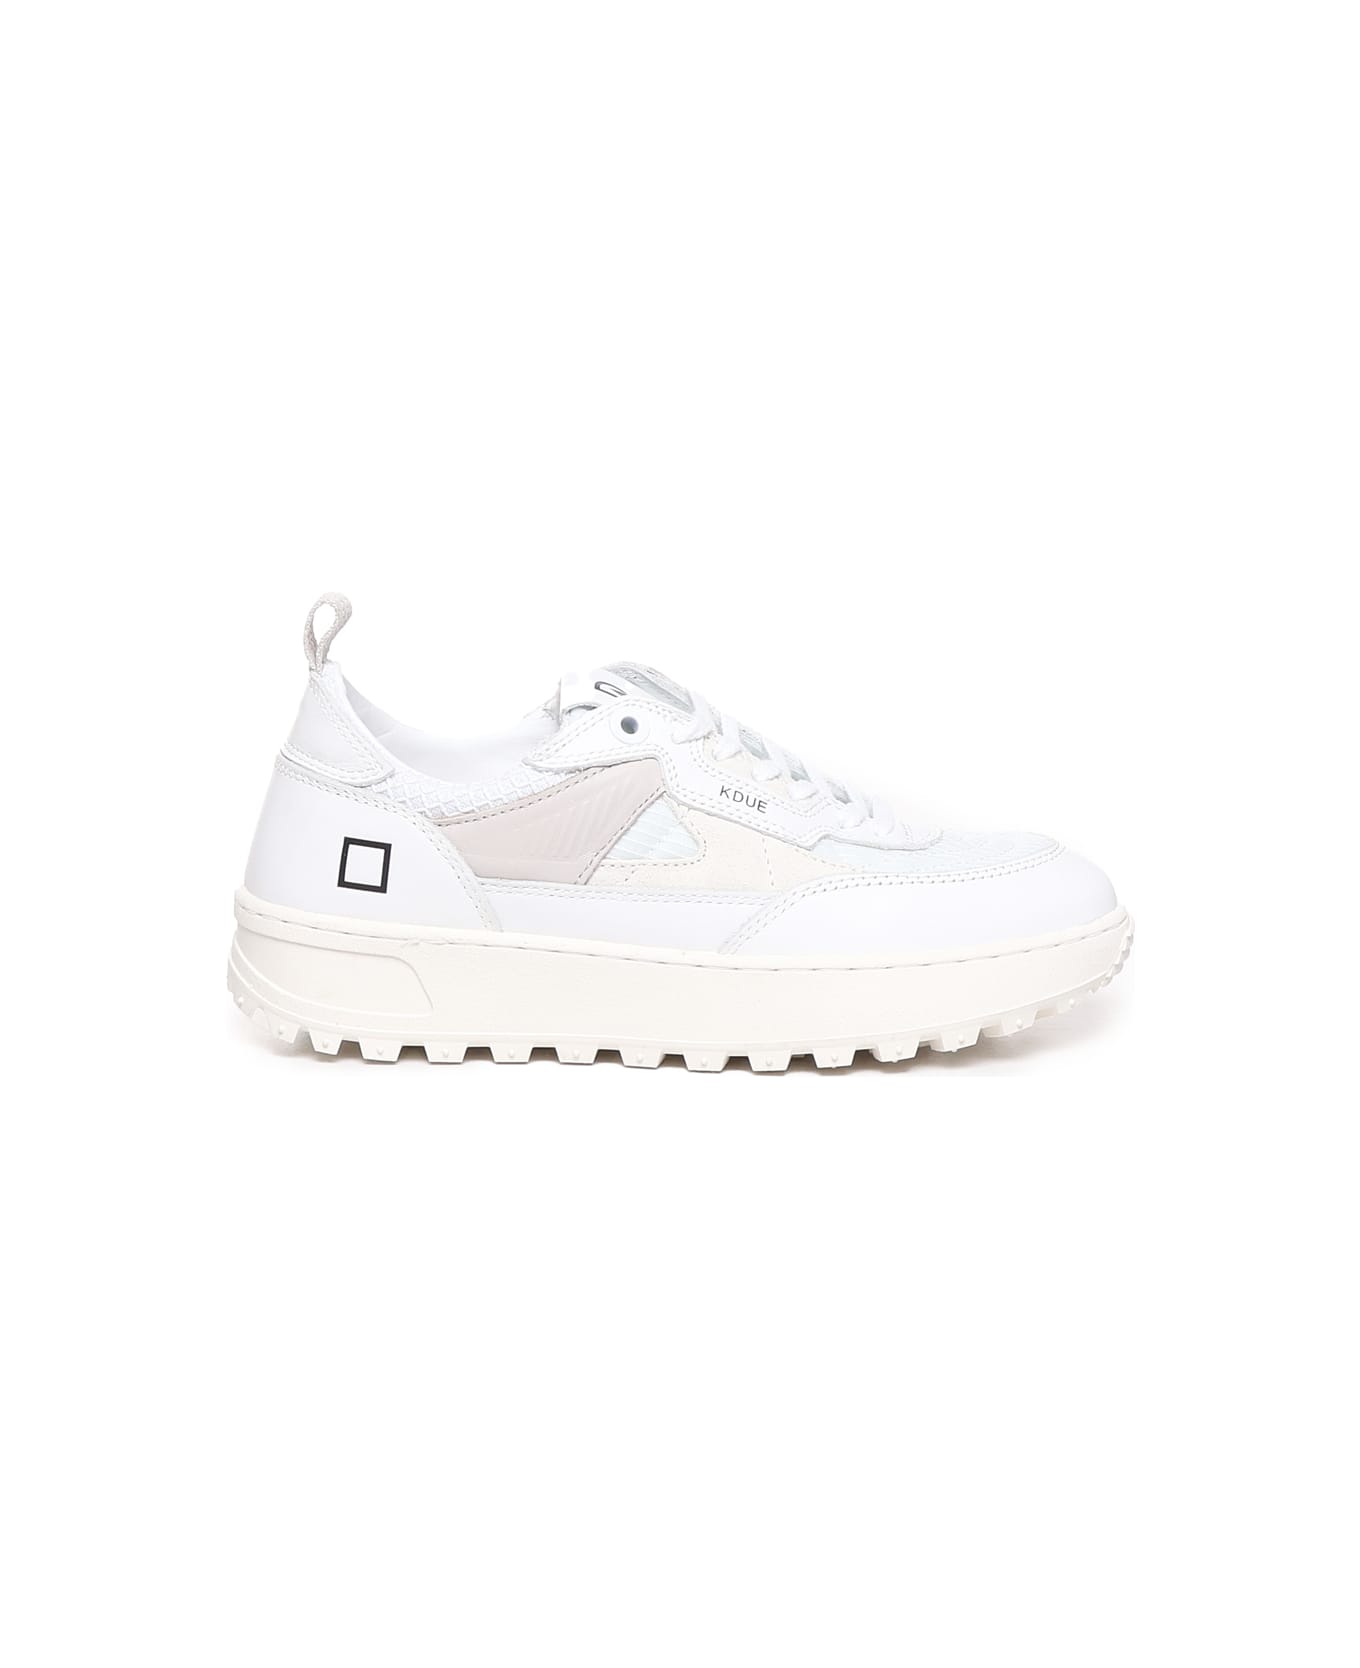 D.A.T.E. Kdue Mono Sneakers - White スニーカー